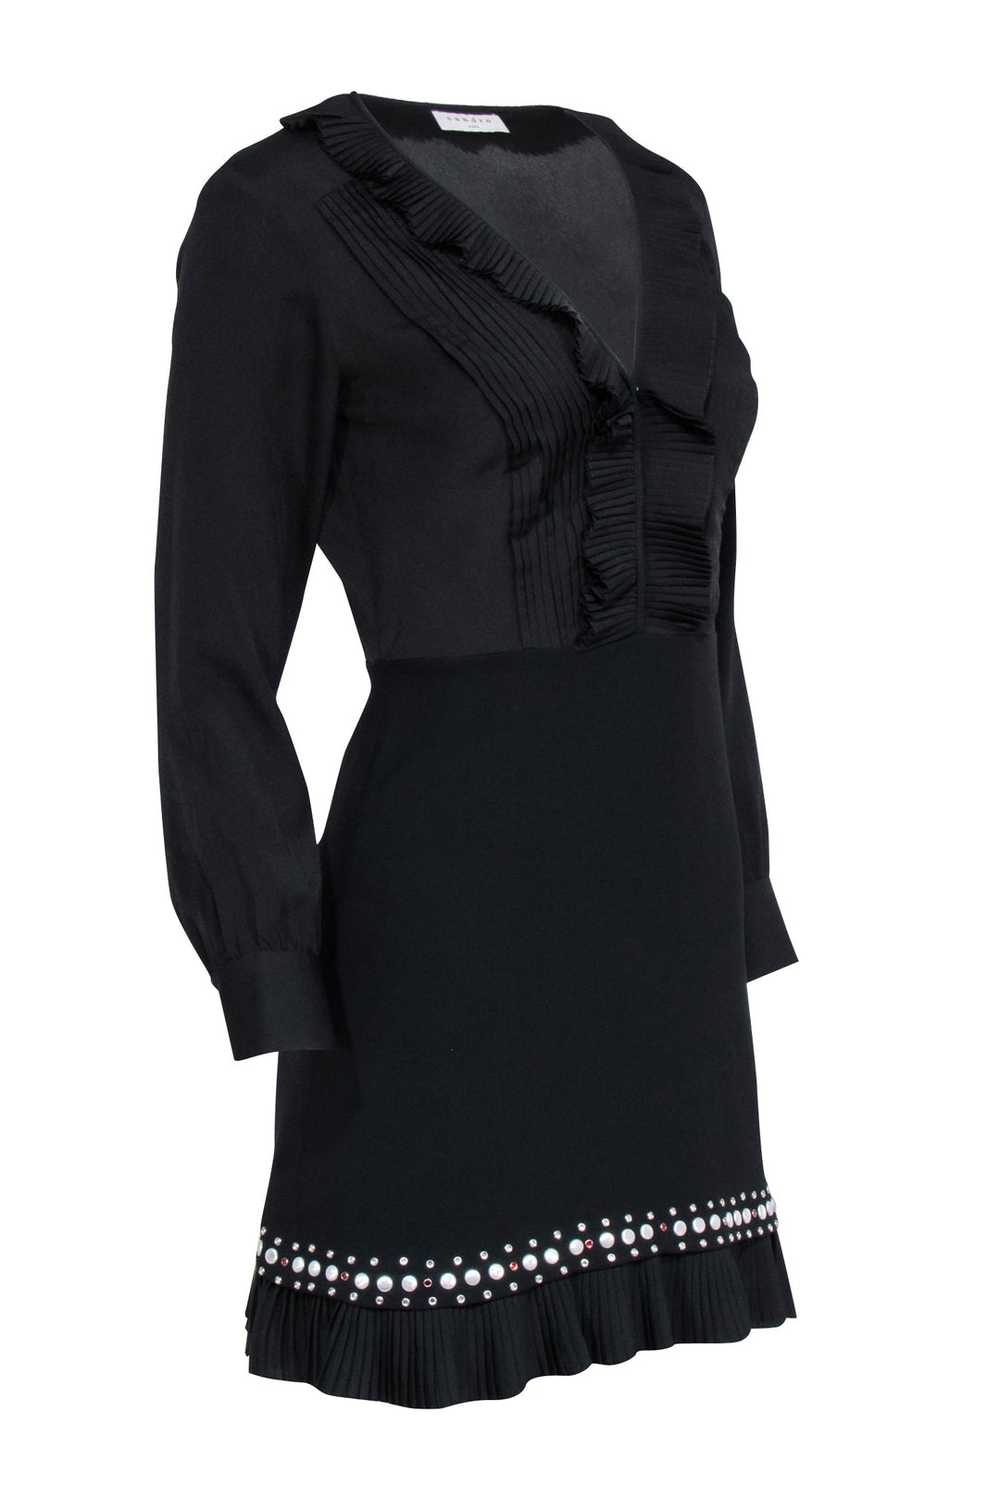 Sandro - Black Long Sleeve Embellished Dress w/ R… - image 2